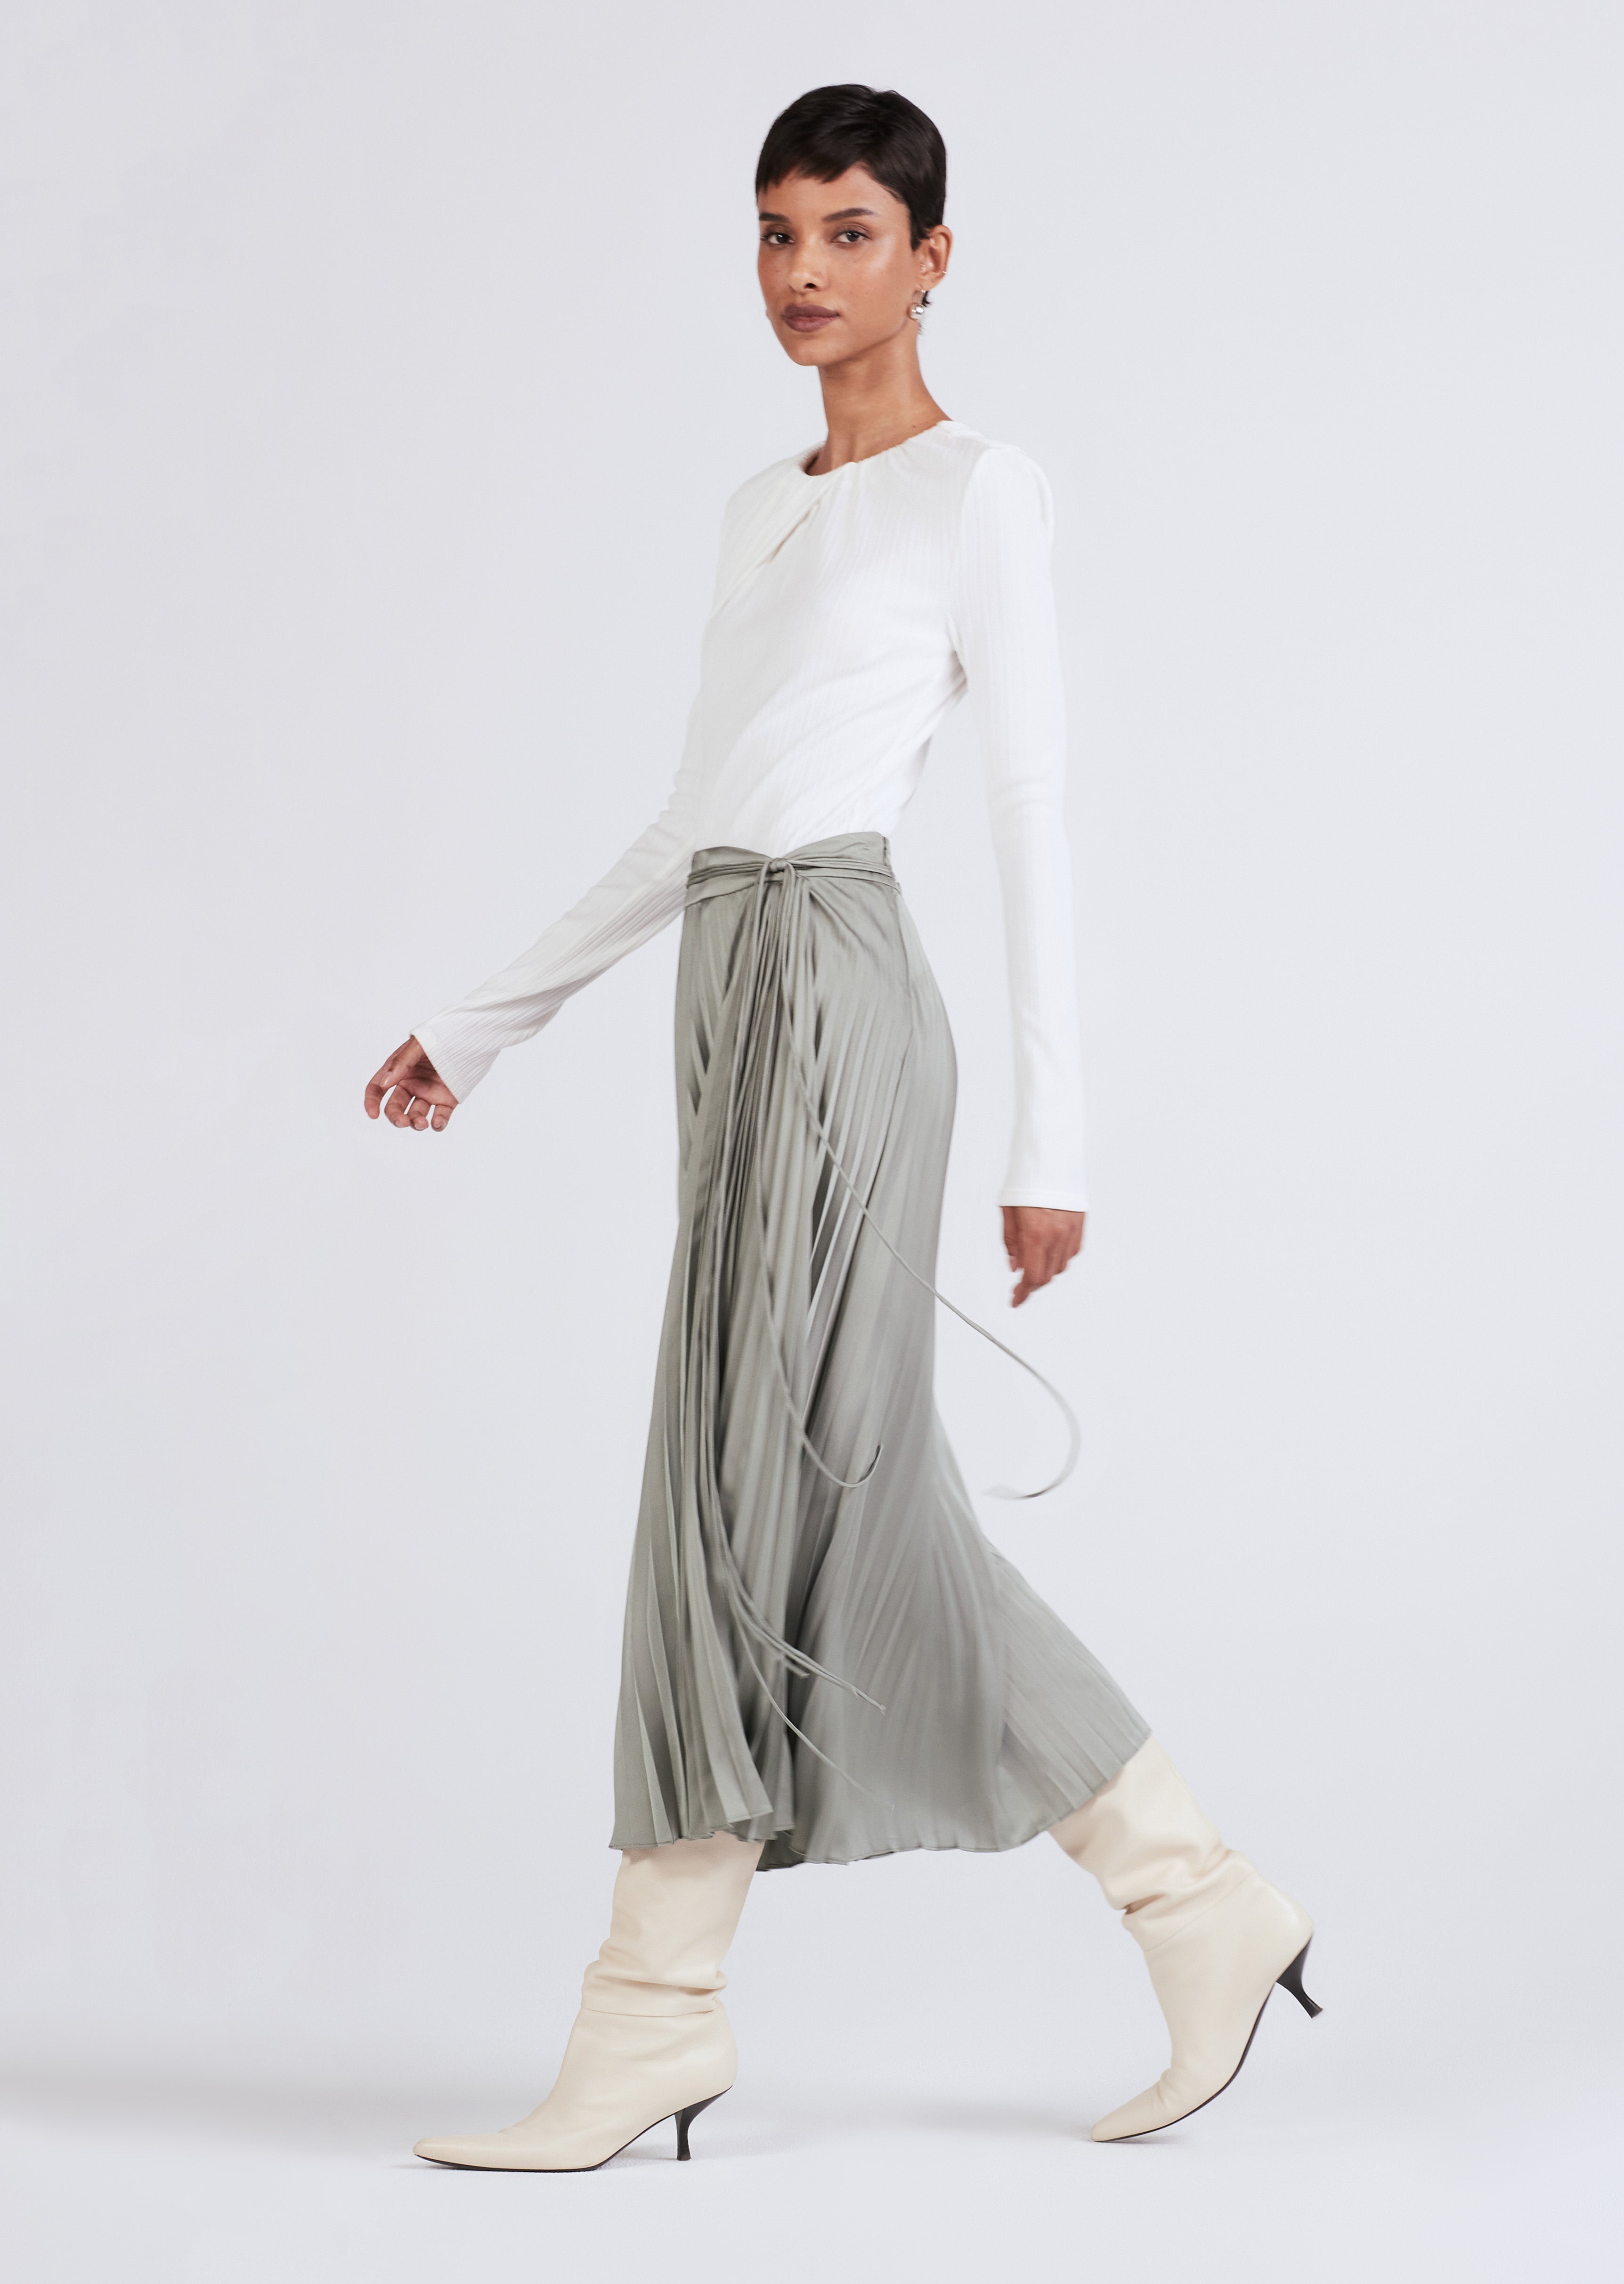 Modern & Elegant Women's Fashion | Derek Lam 10 Crosby